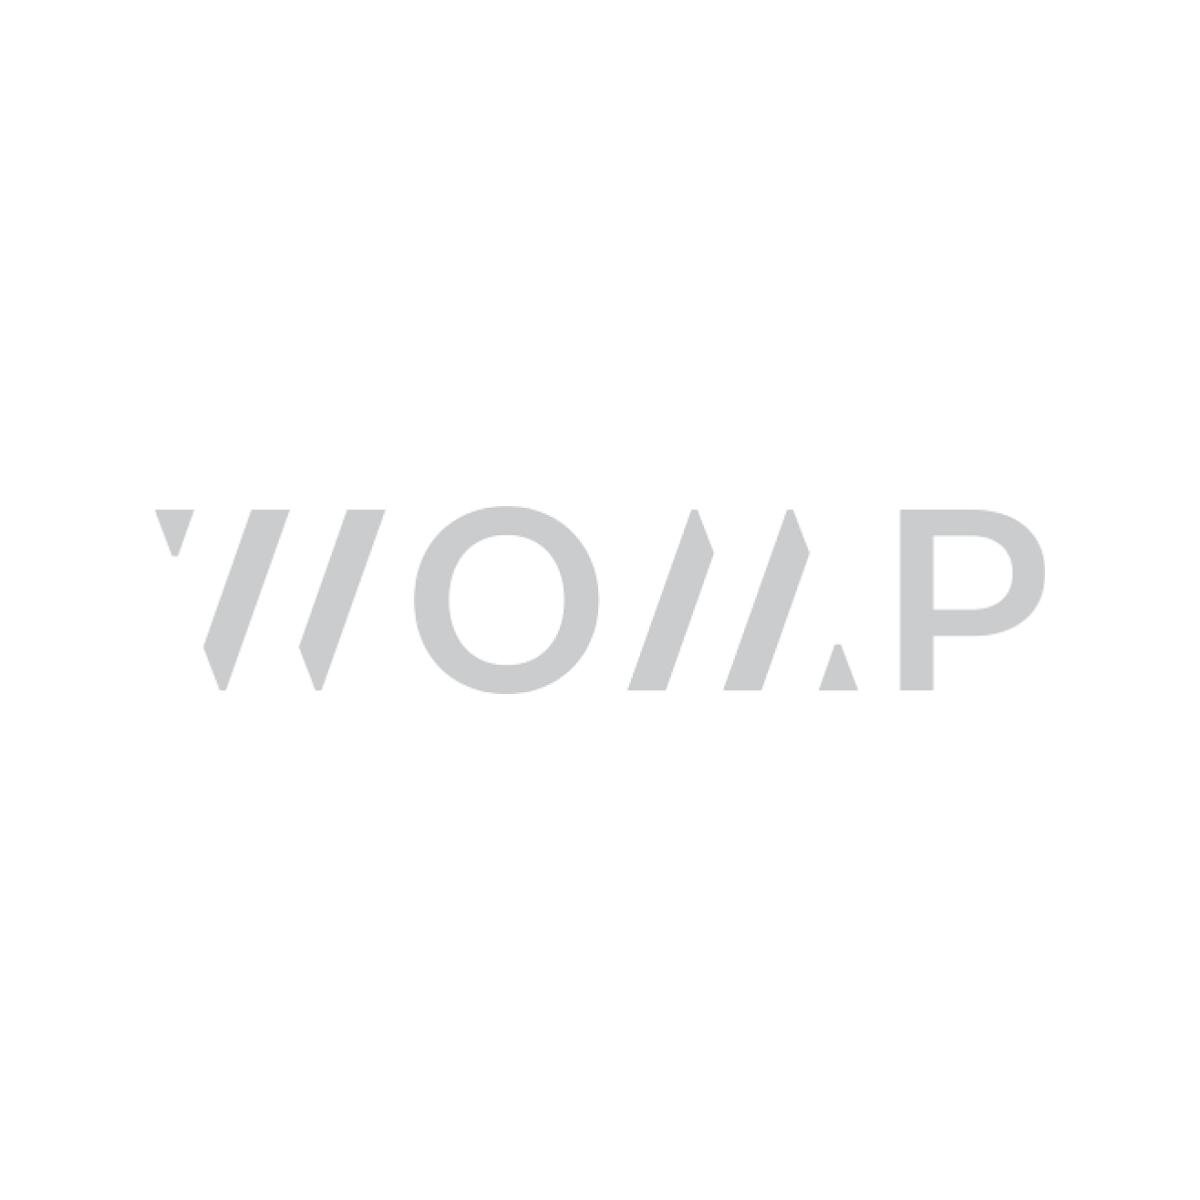 V1.VC Web Logo Template copy 2.jpg